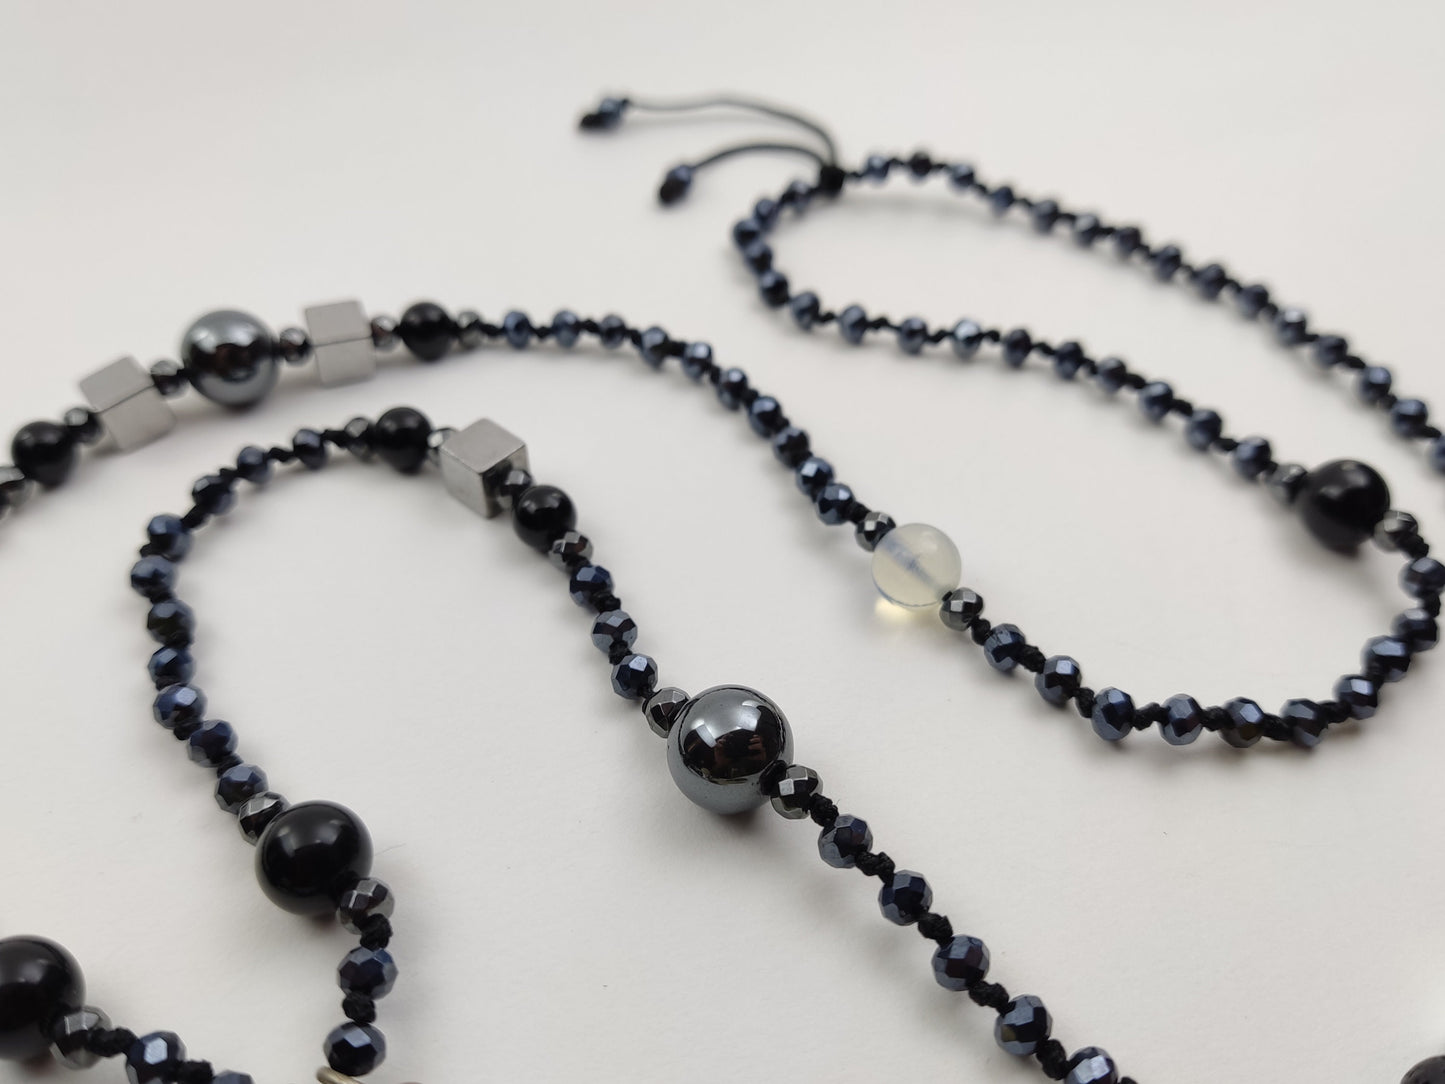 Long Semi Precious Stones Swan Necklace, Pendant With Marcasite - Mother Of Pearl, 70cm, Griechische Halskette Schmuck, Jewelry, Schmuck